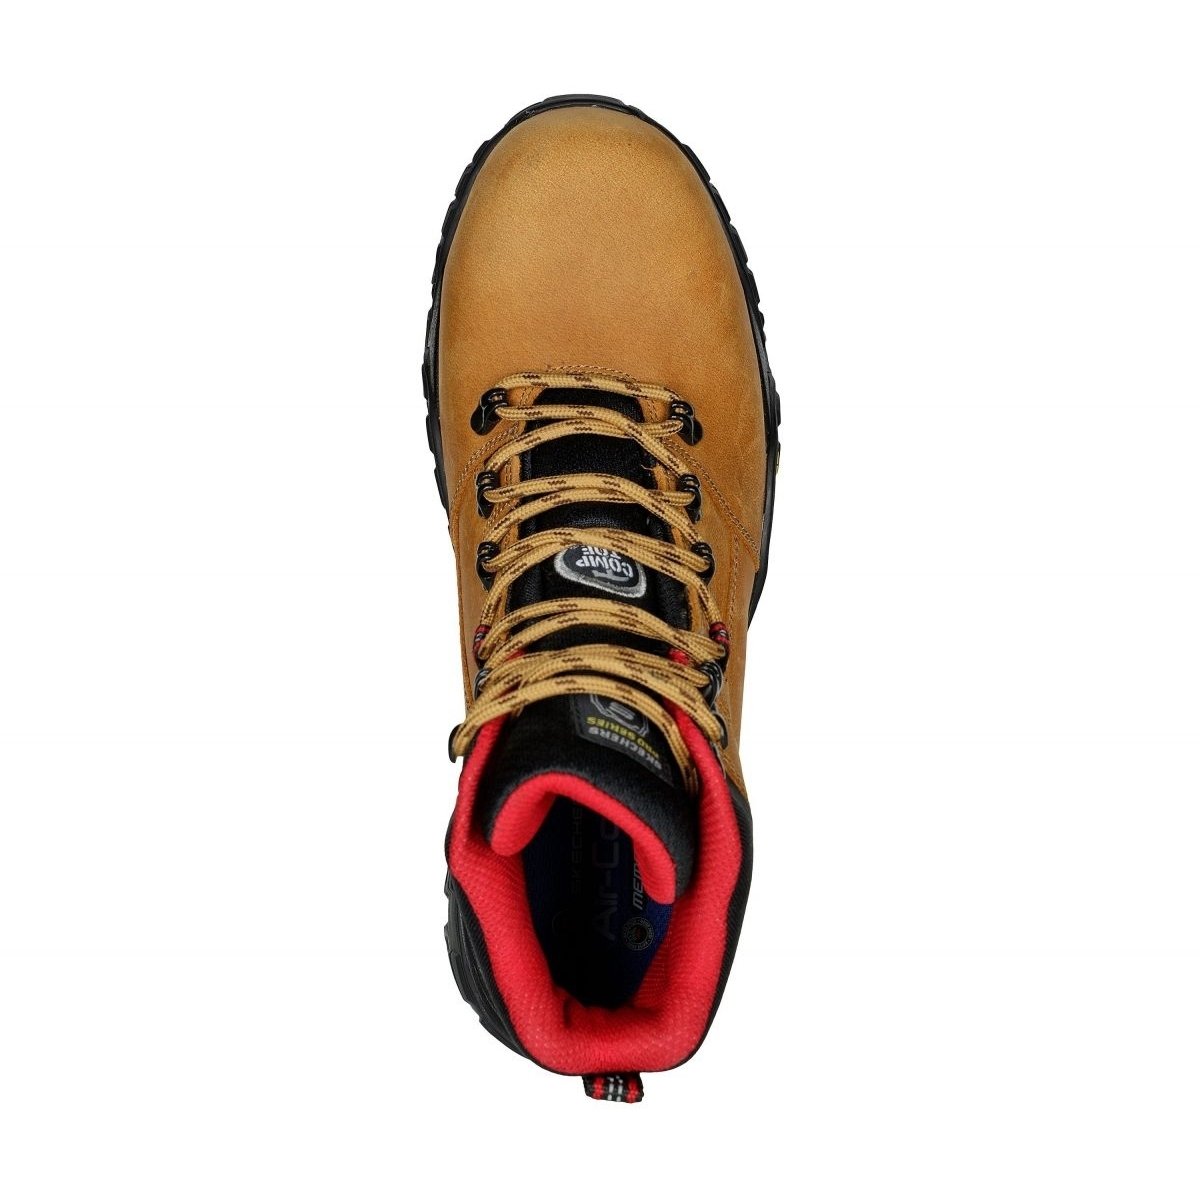 Skechers Men's, Treadix Goodyear Comp Toe Work Boot BROWN - Tan, 10.5